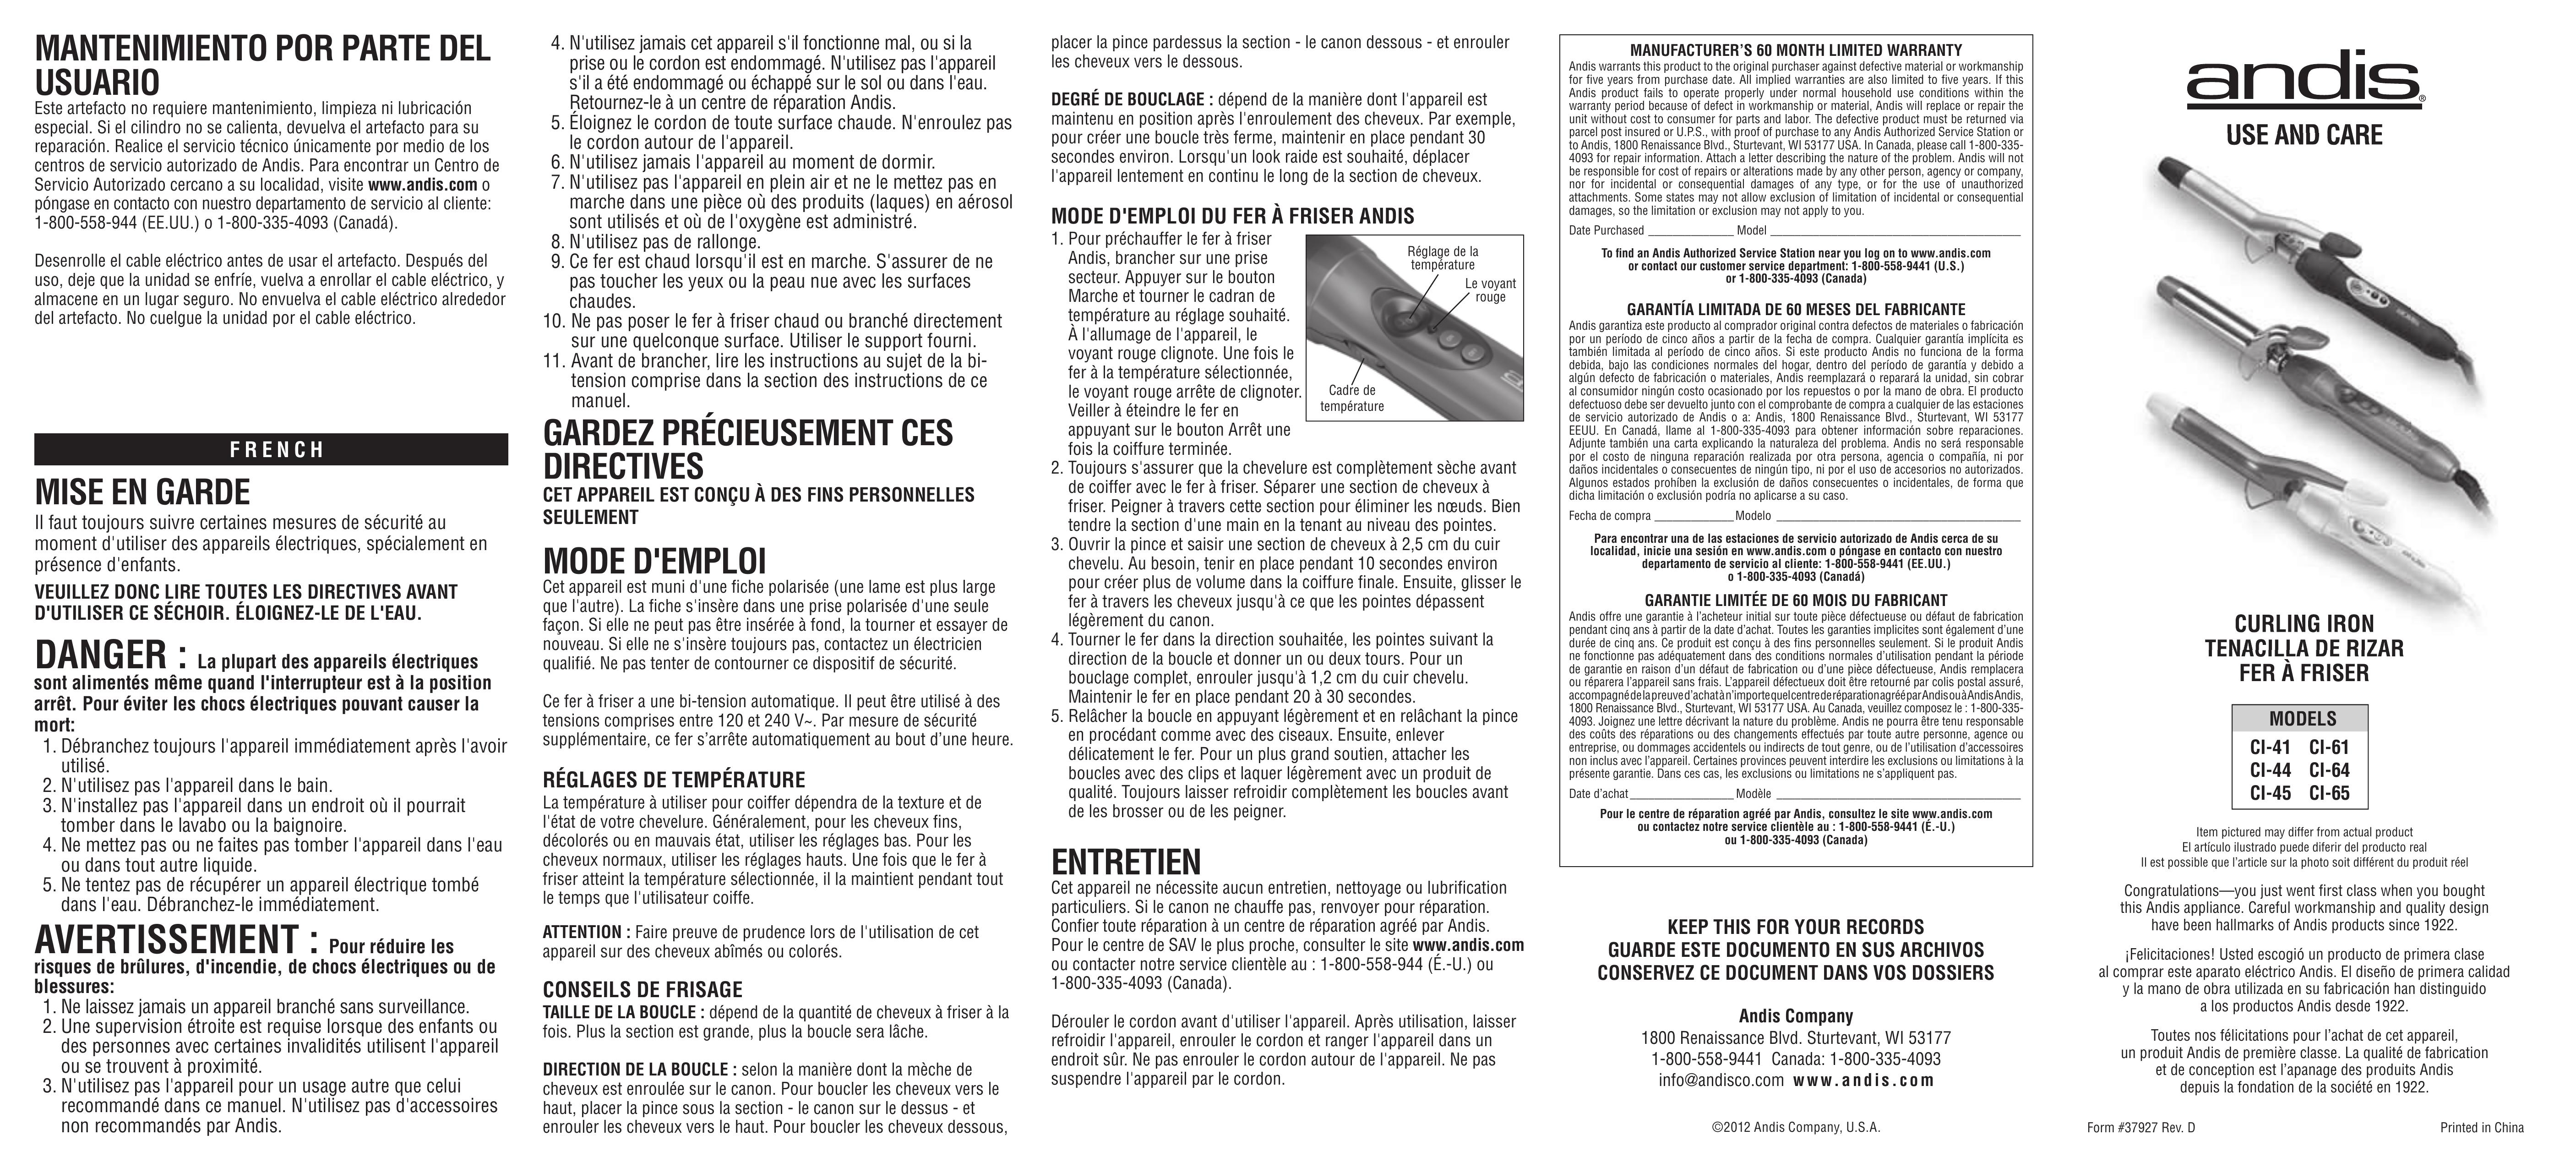 Andis Company CI-64 Styling Iron User Manual